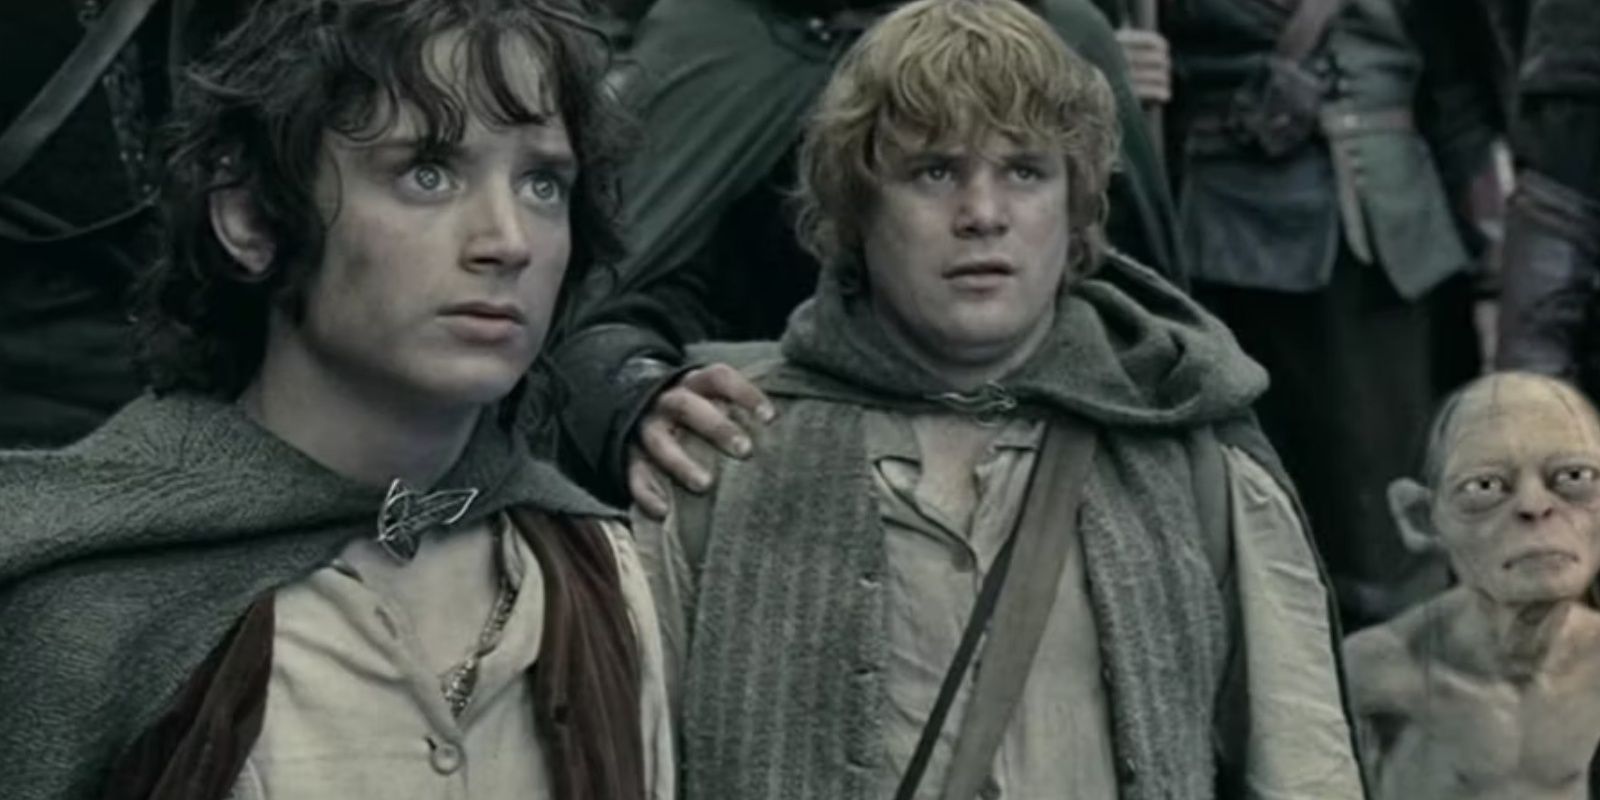 Elijah Wood as Frodo. Sean Astin as Sam. Andy Serkis as Gollum.